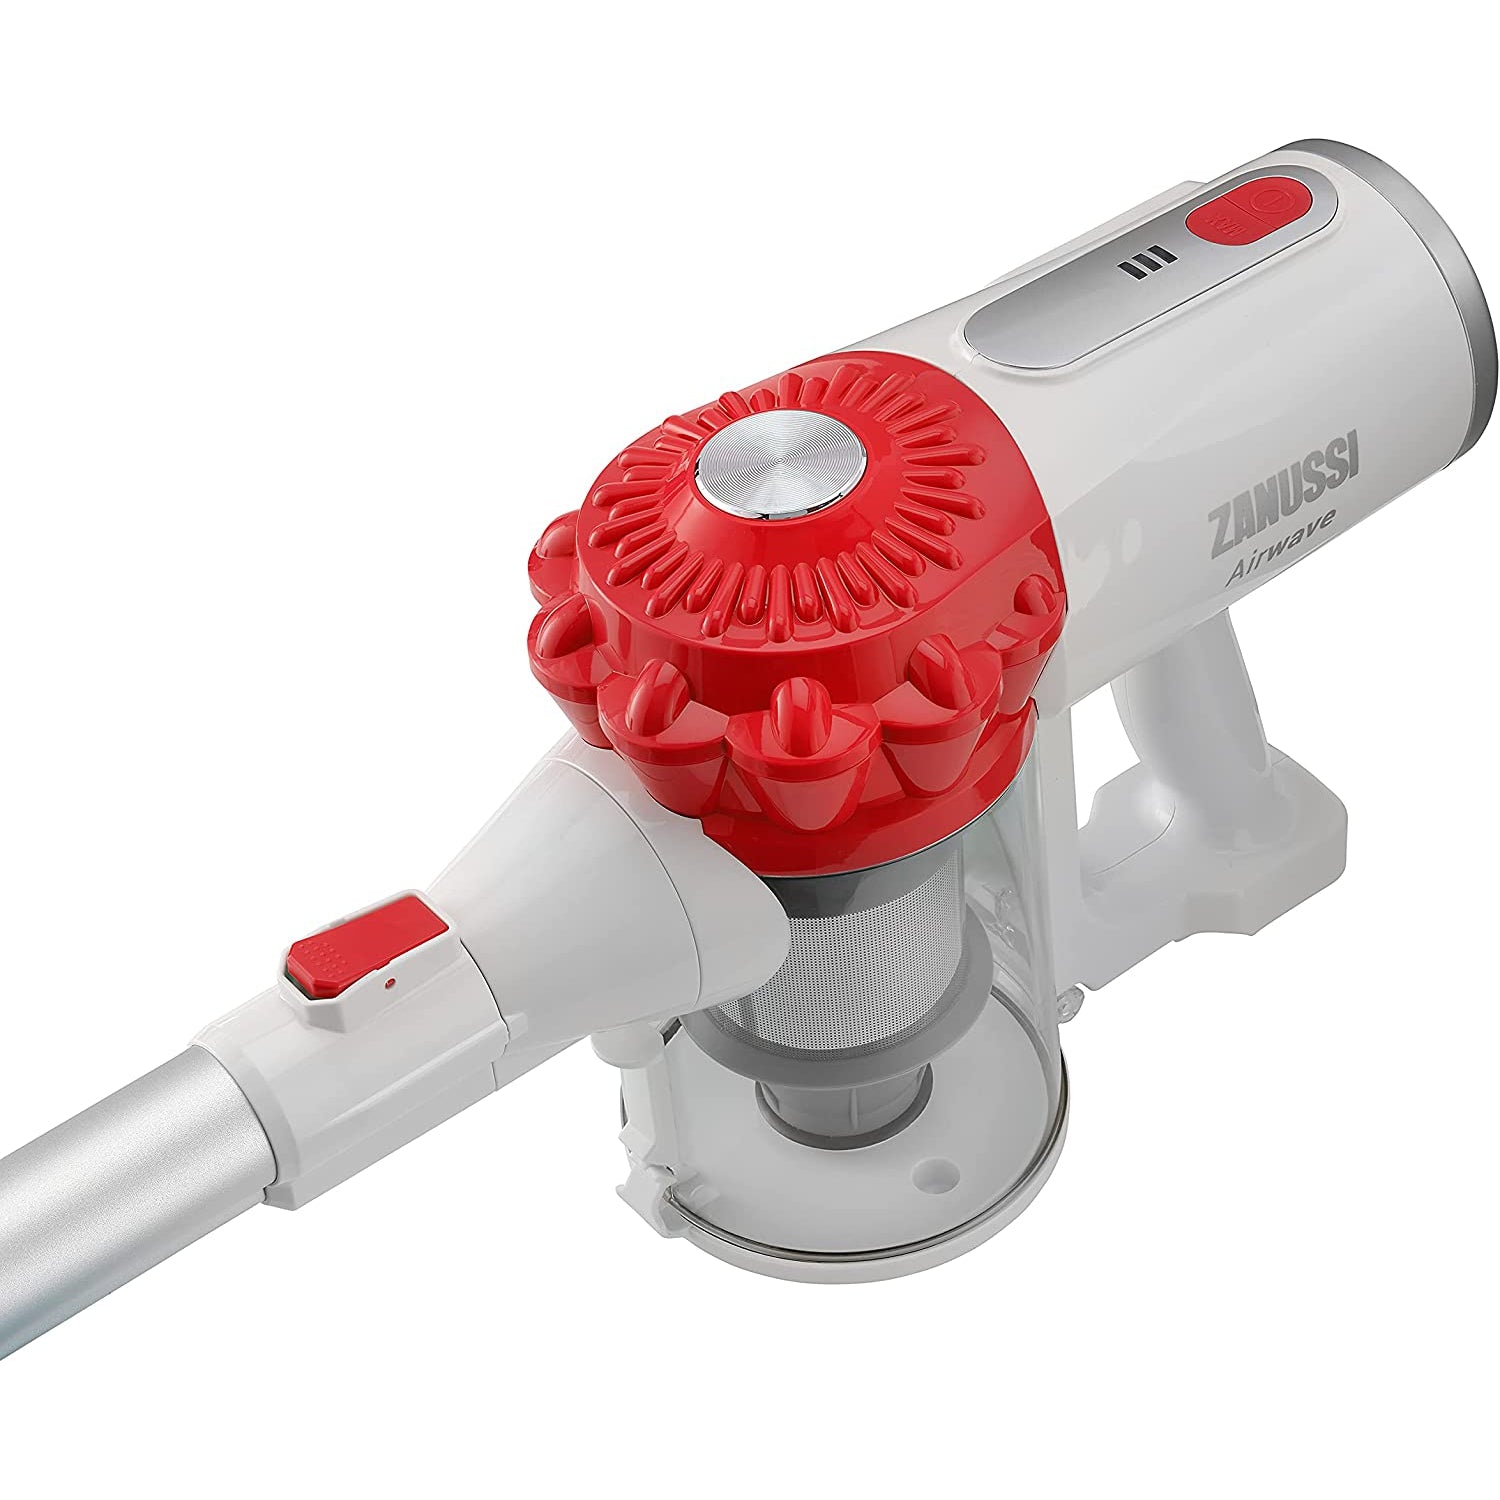 Zanussi Airwave ZHS-32802-RD Cordless Vacuum Cleaner - Red/White